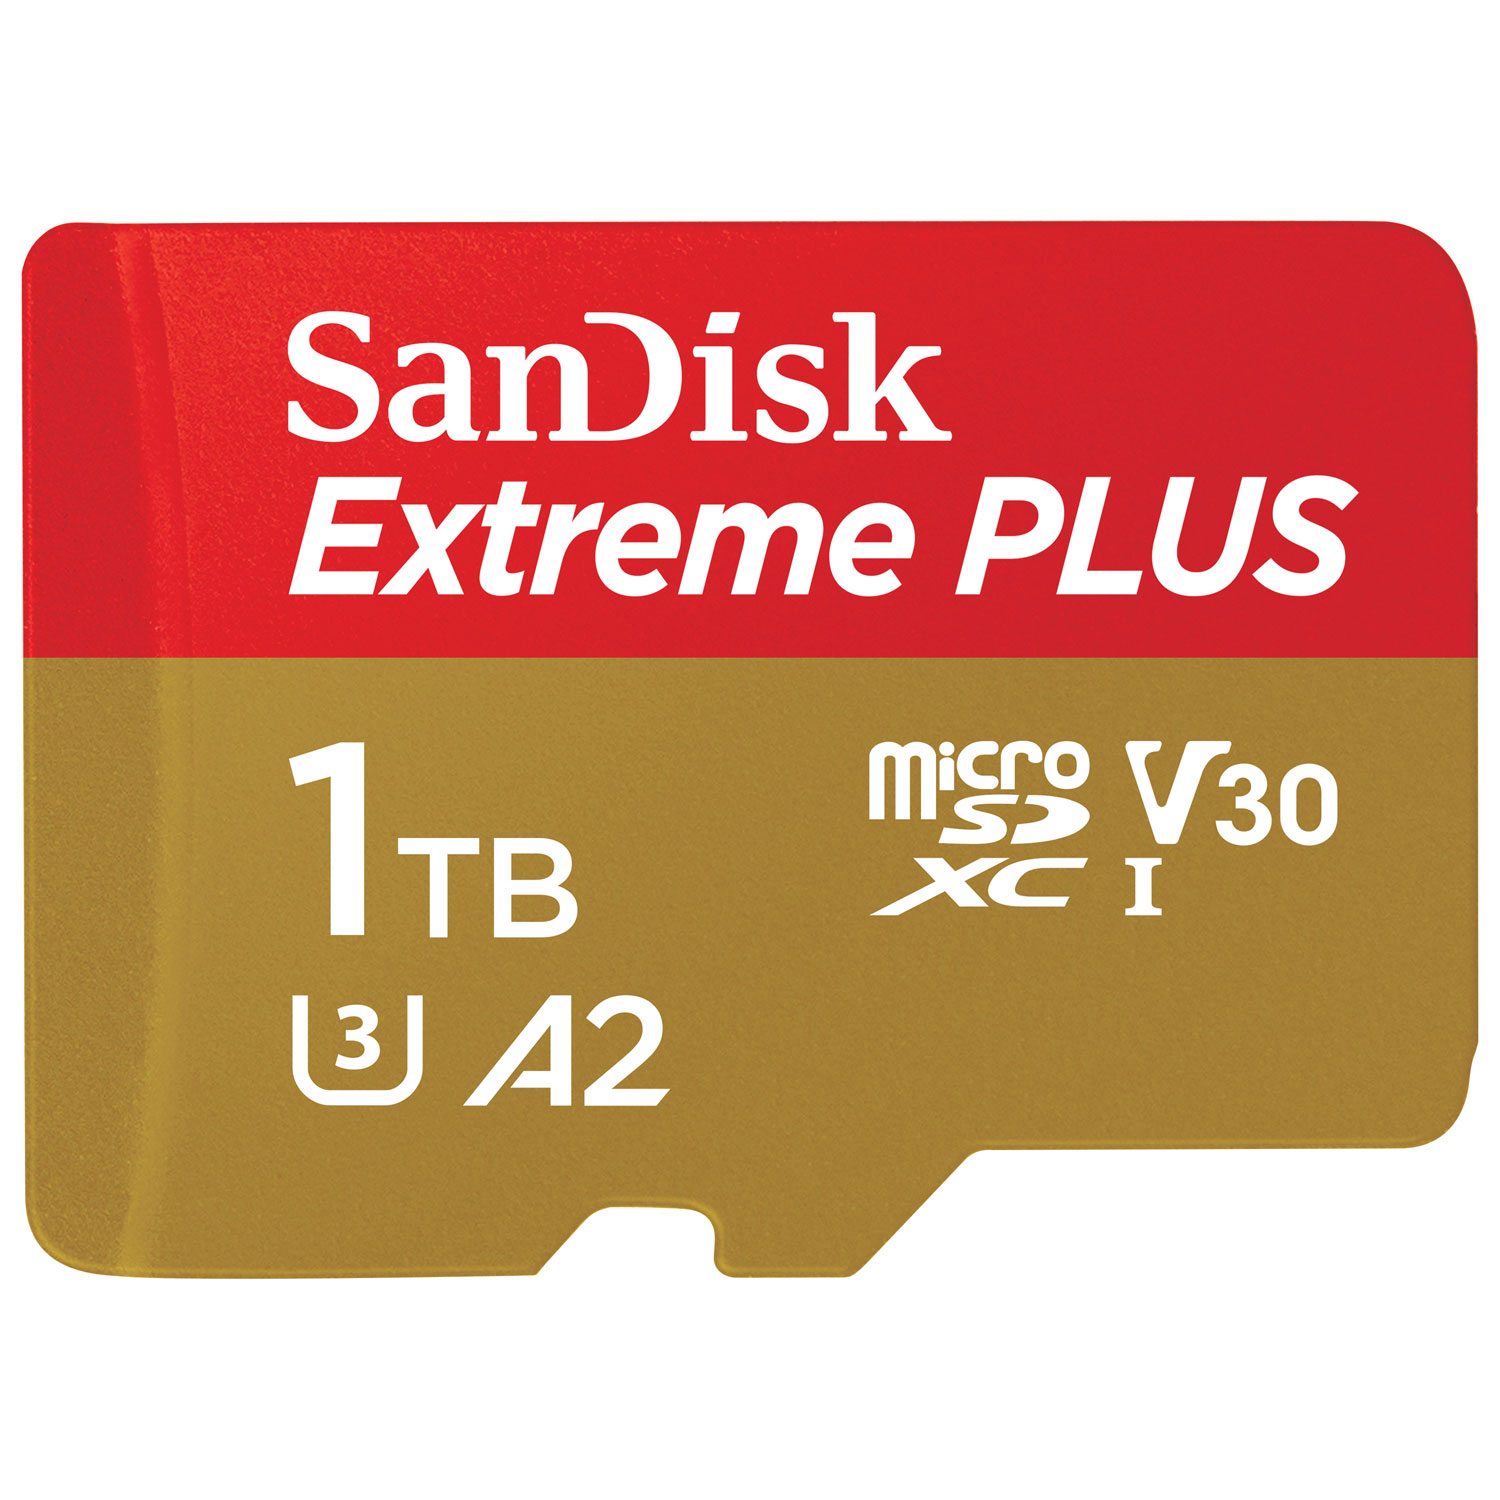 SanDisk Extreme Plus 1TB 200MB/s microSD Memory Card